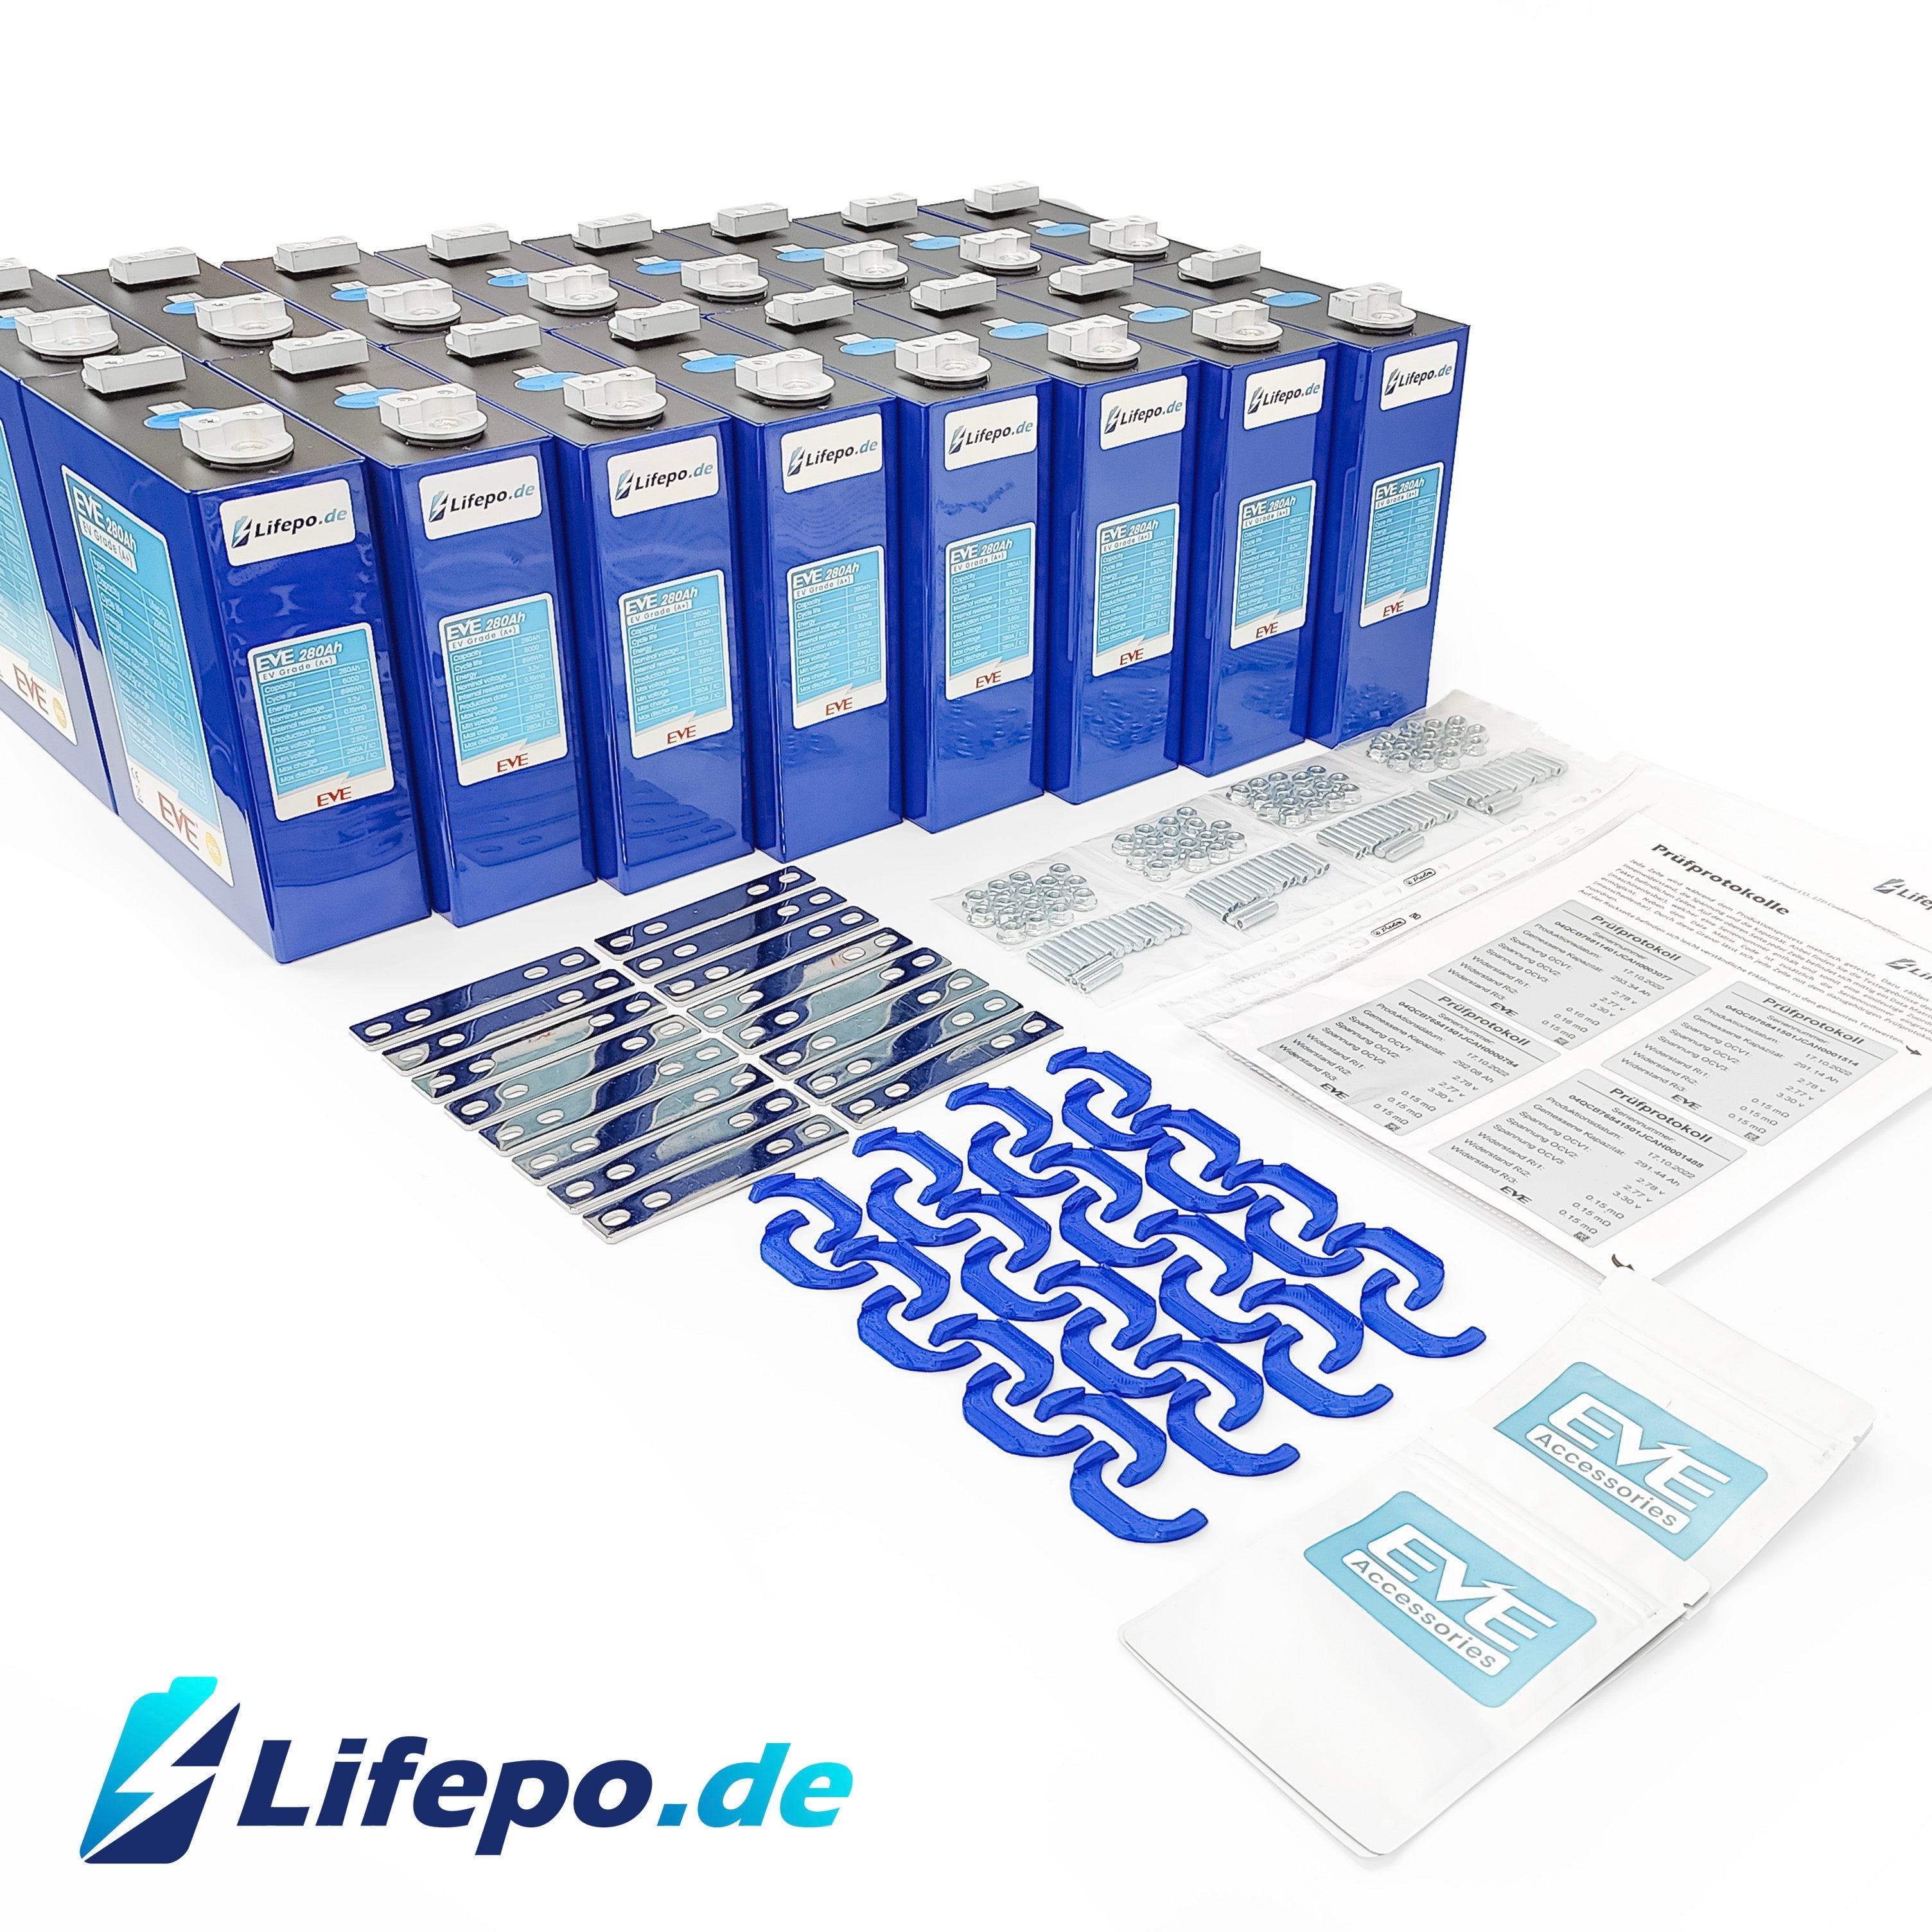 Lifepo.de Lifepo4 EVE 3.2V 280Ah Zelle, 8er-Pack